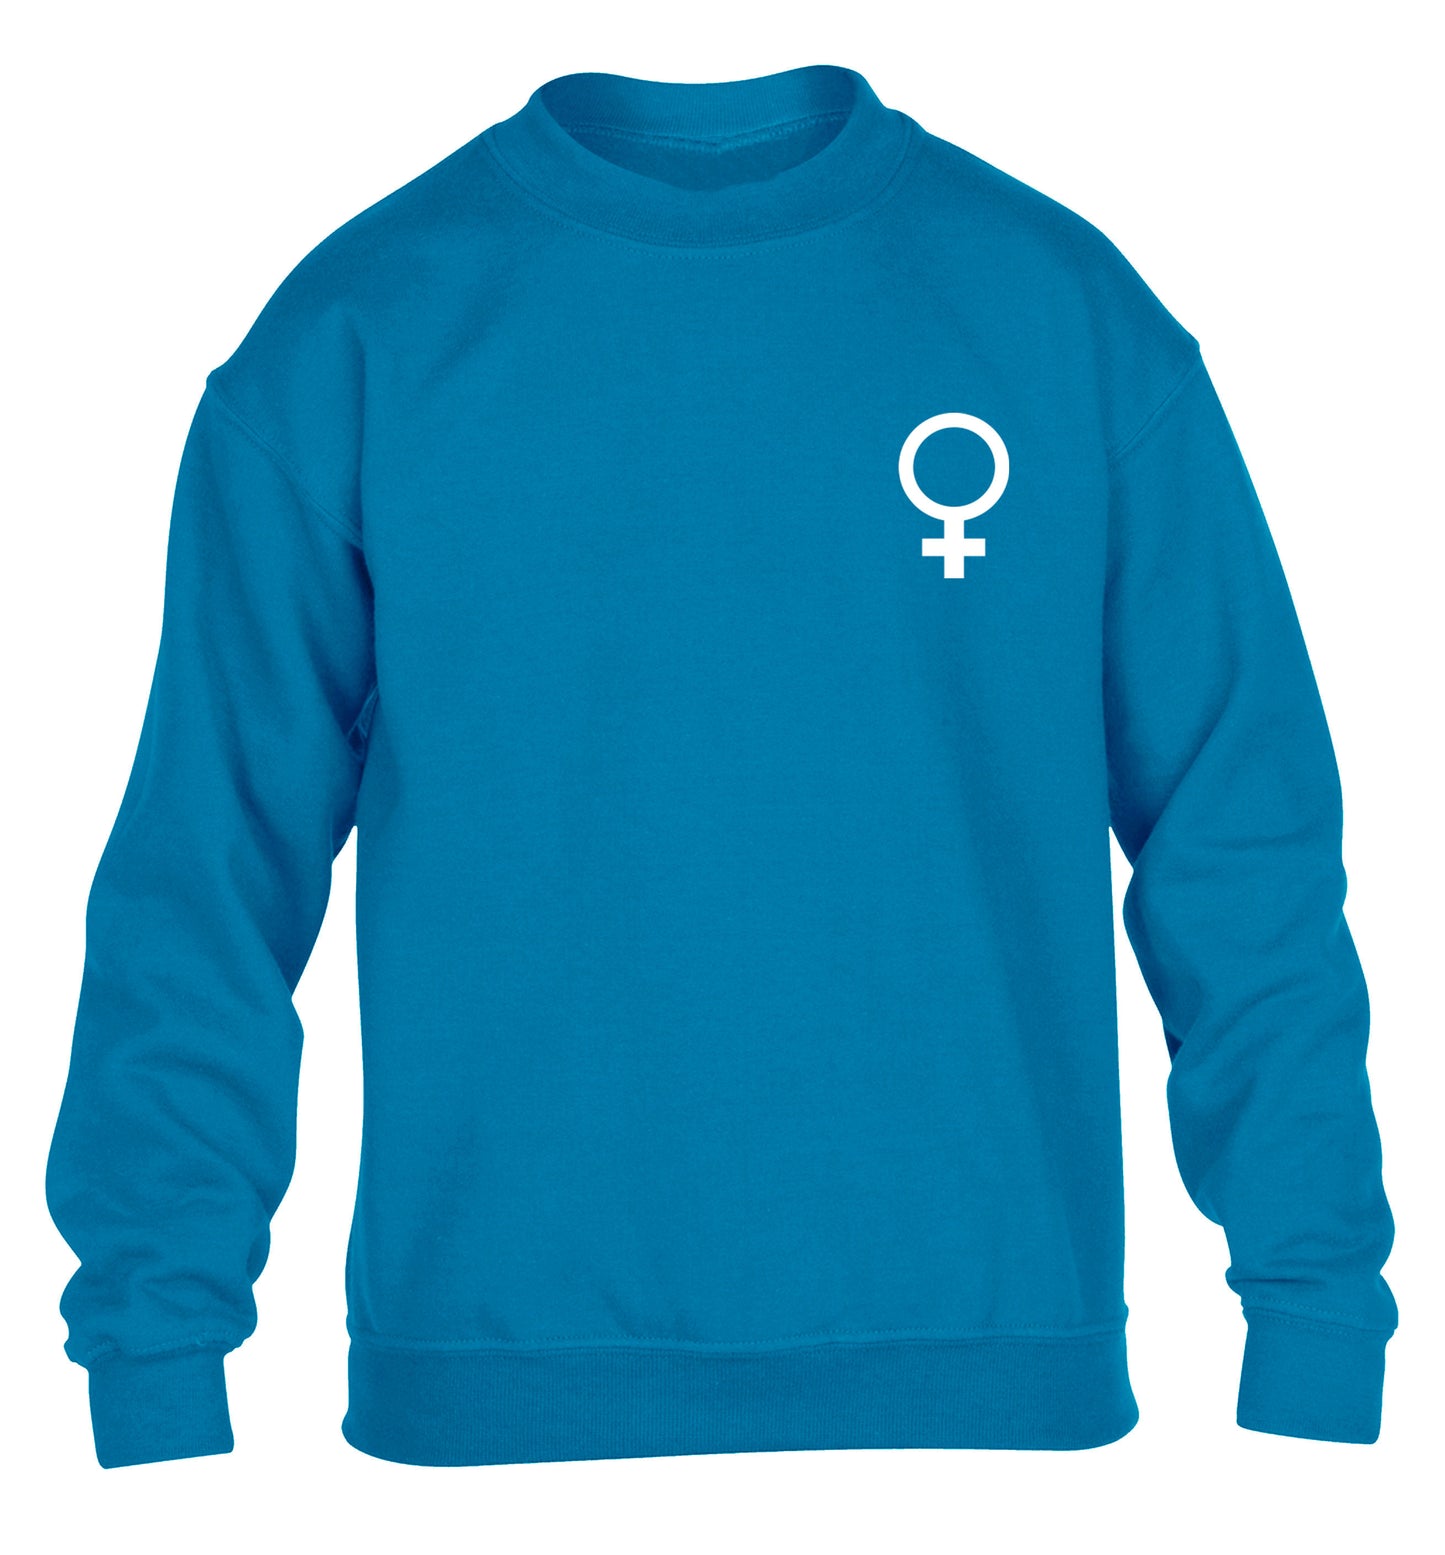 Female pocket symbol children's blue sweater 12-14 Years